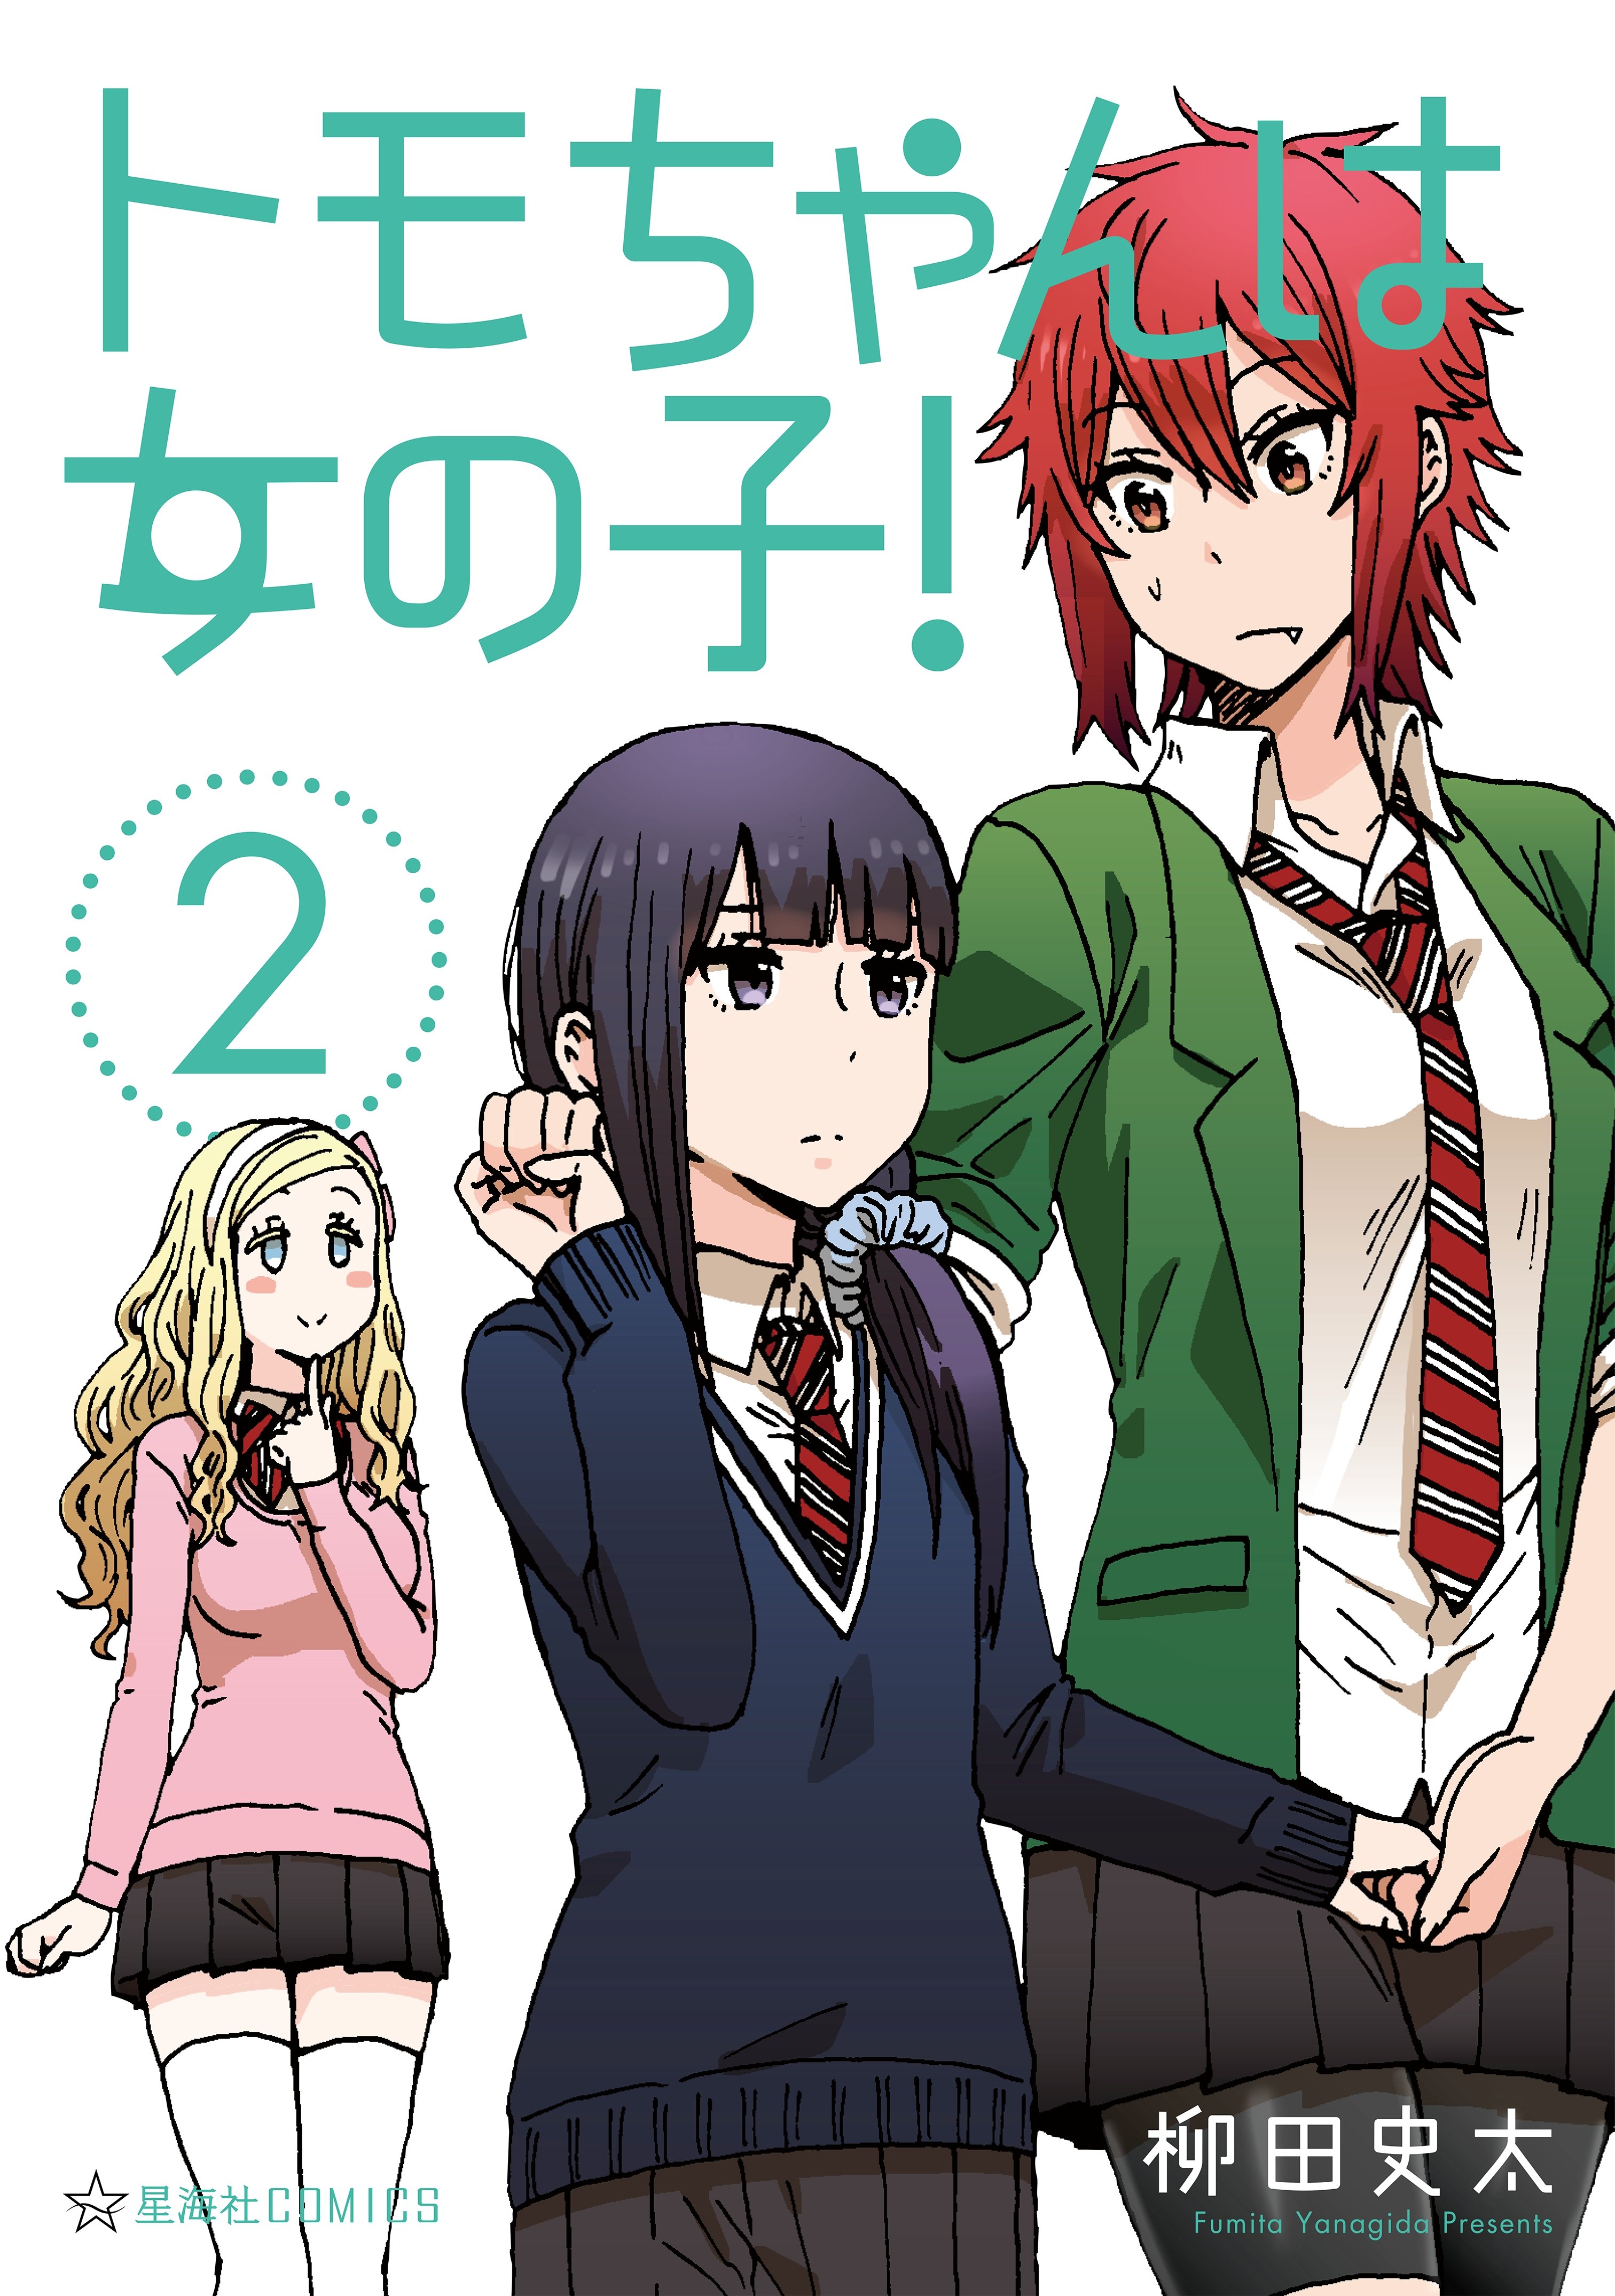 Read Tomo-chan wa Onnanoko! Manga